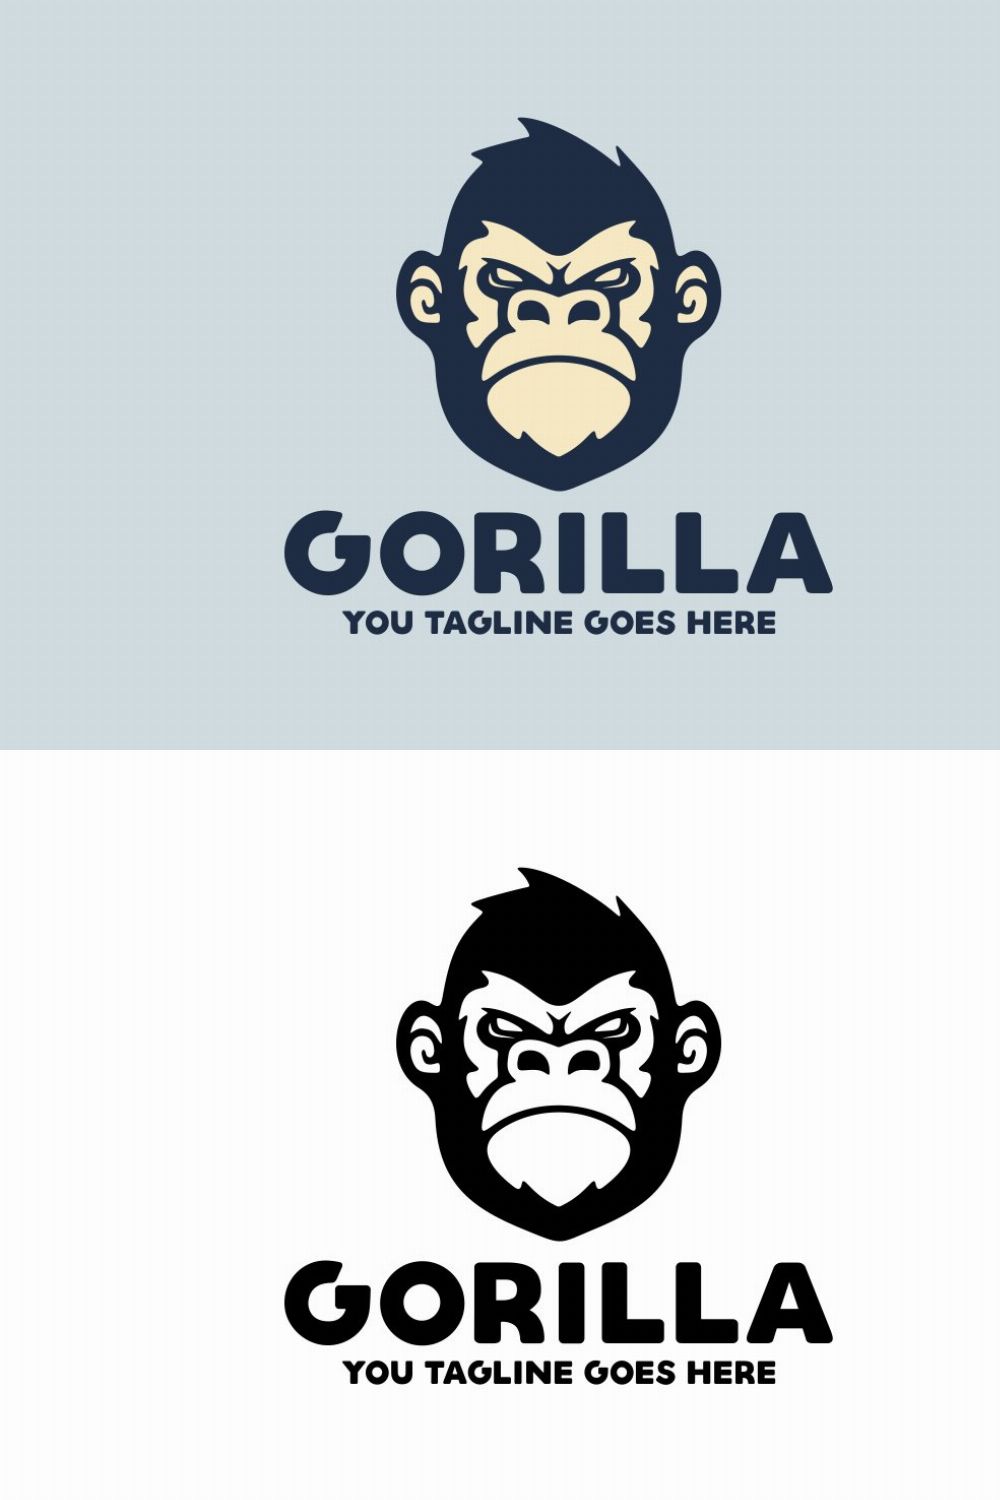 Gorilla pinterest preview image.